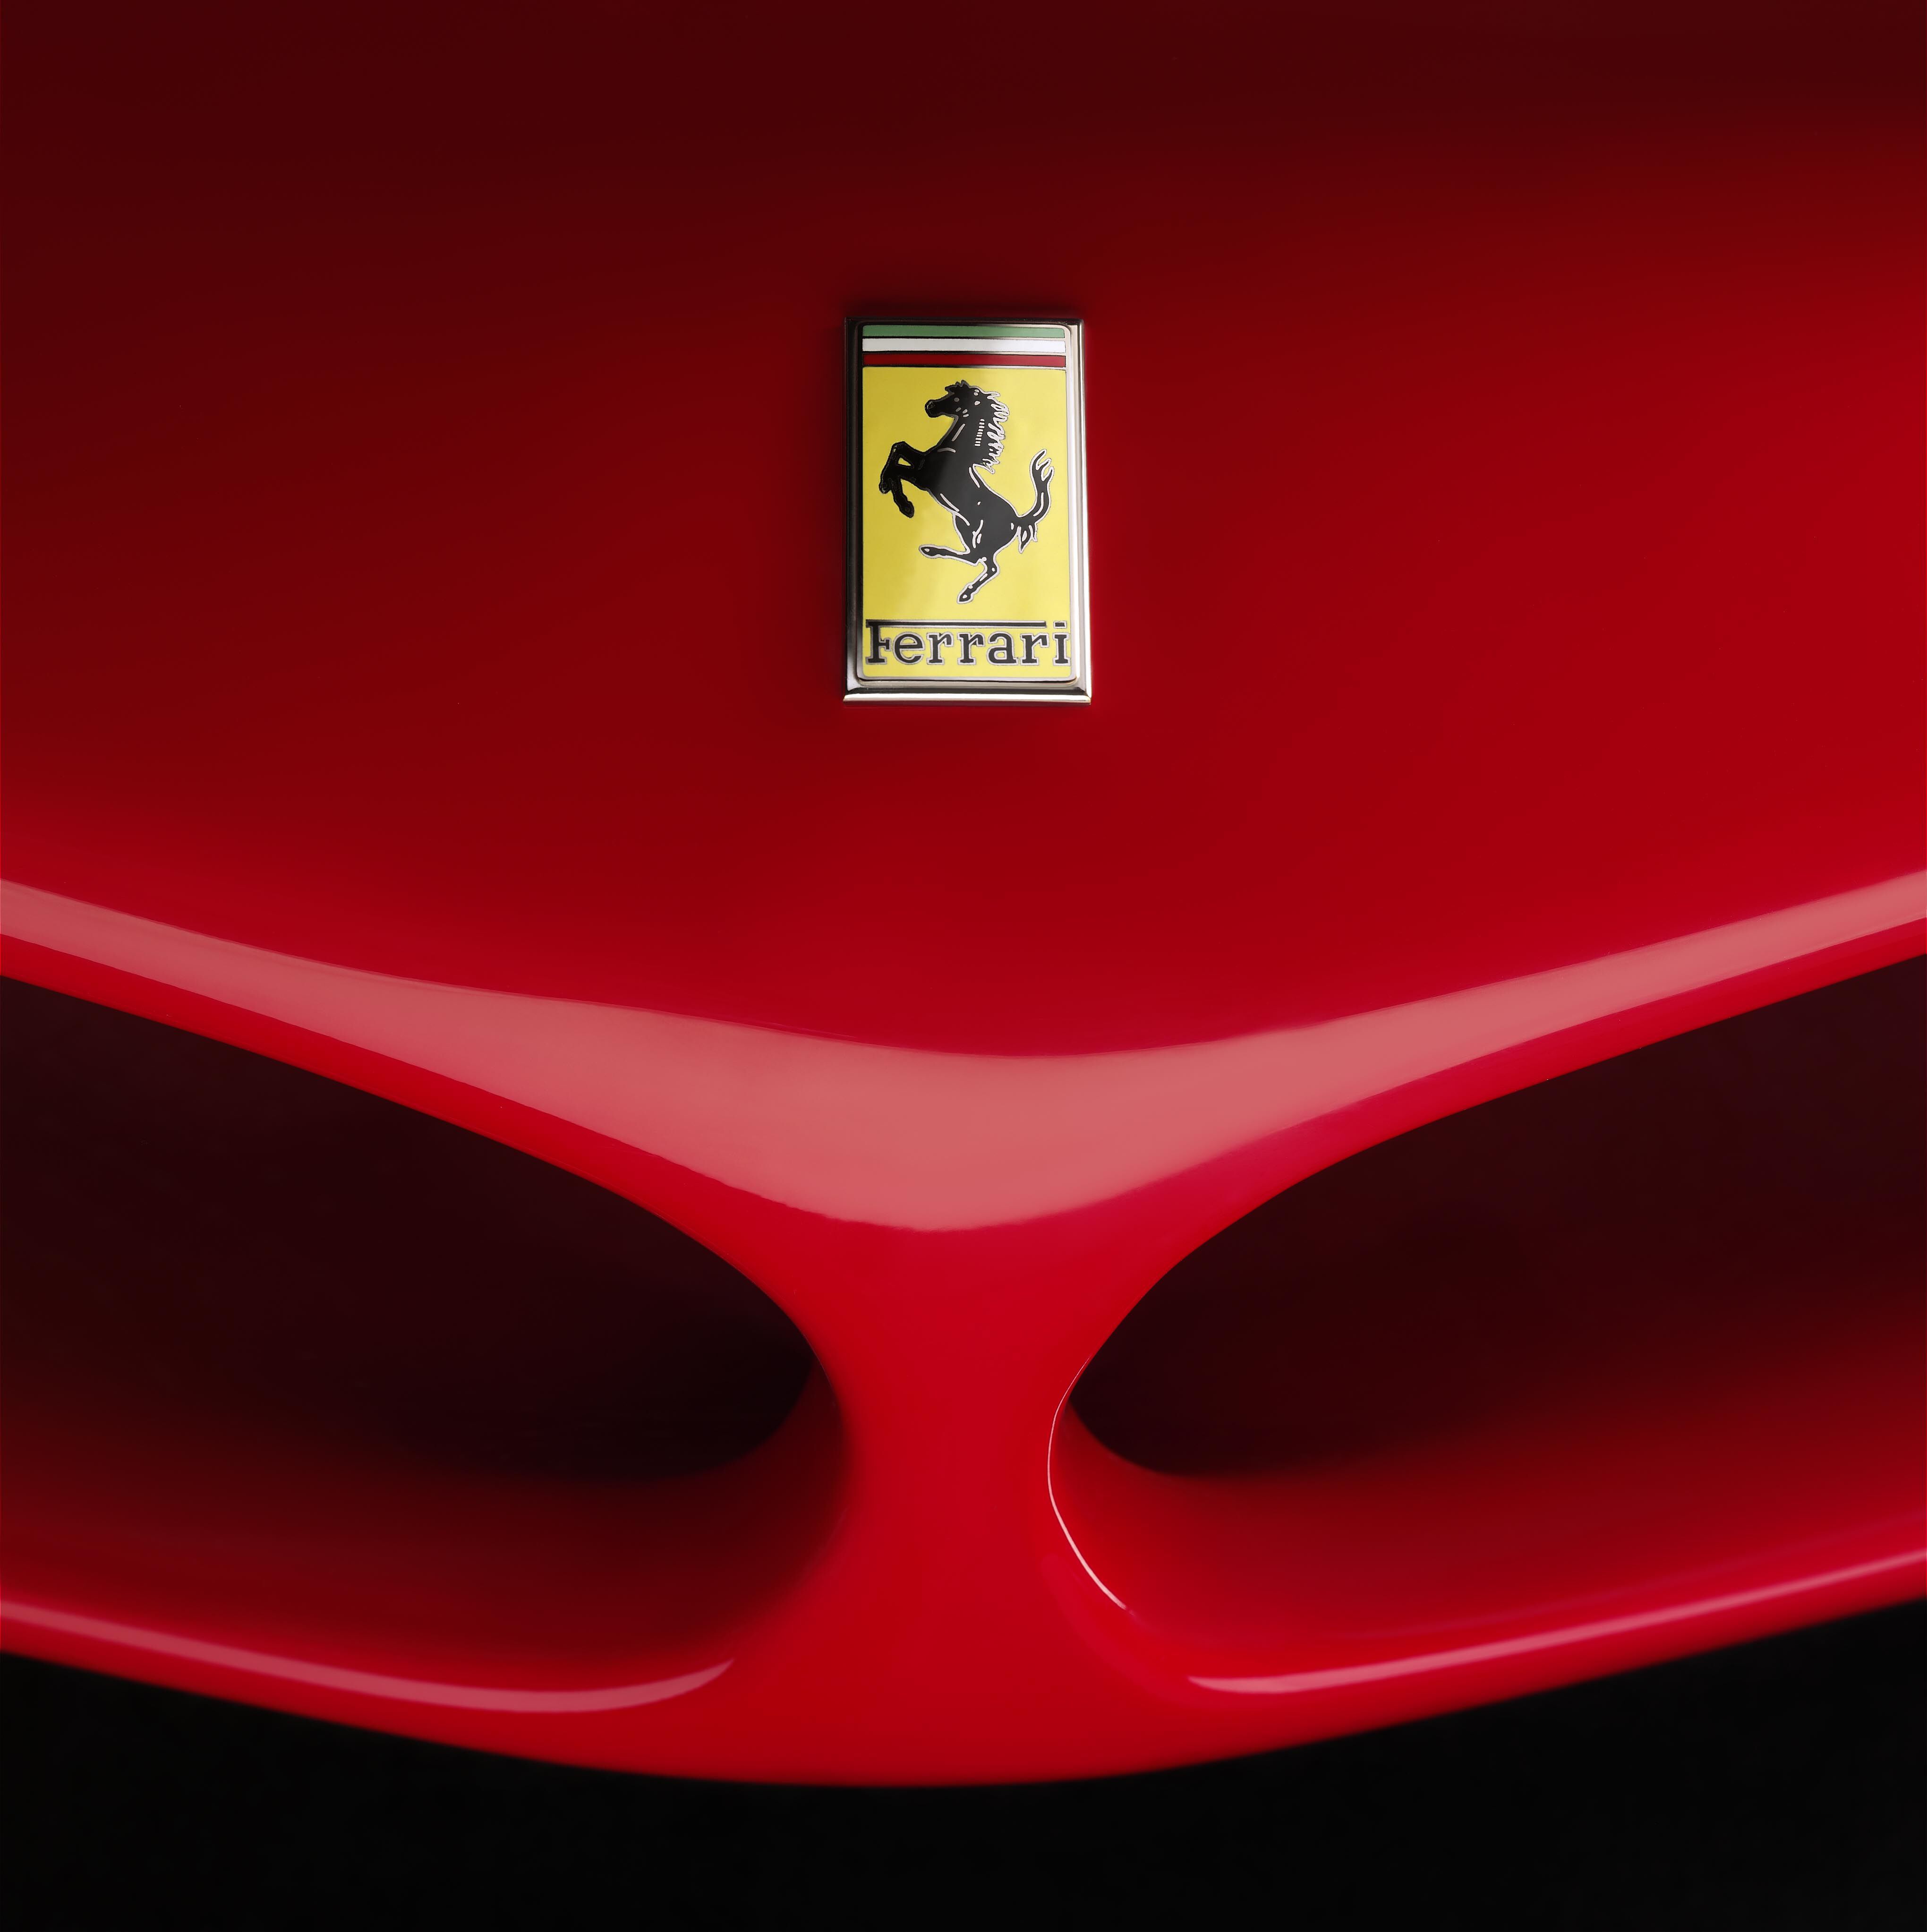 Ferrari 1962 Ferrari 268 SP nose  01756f